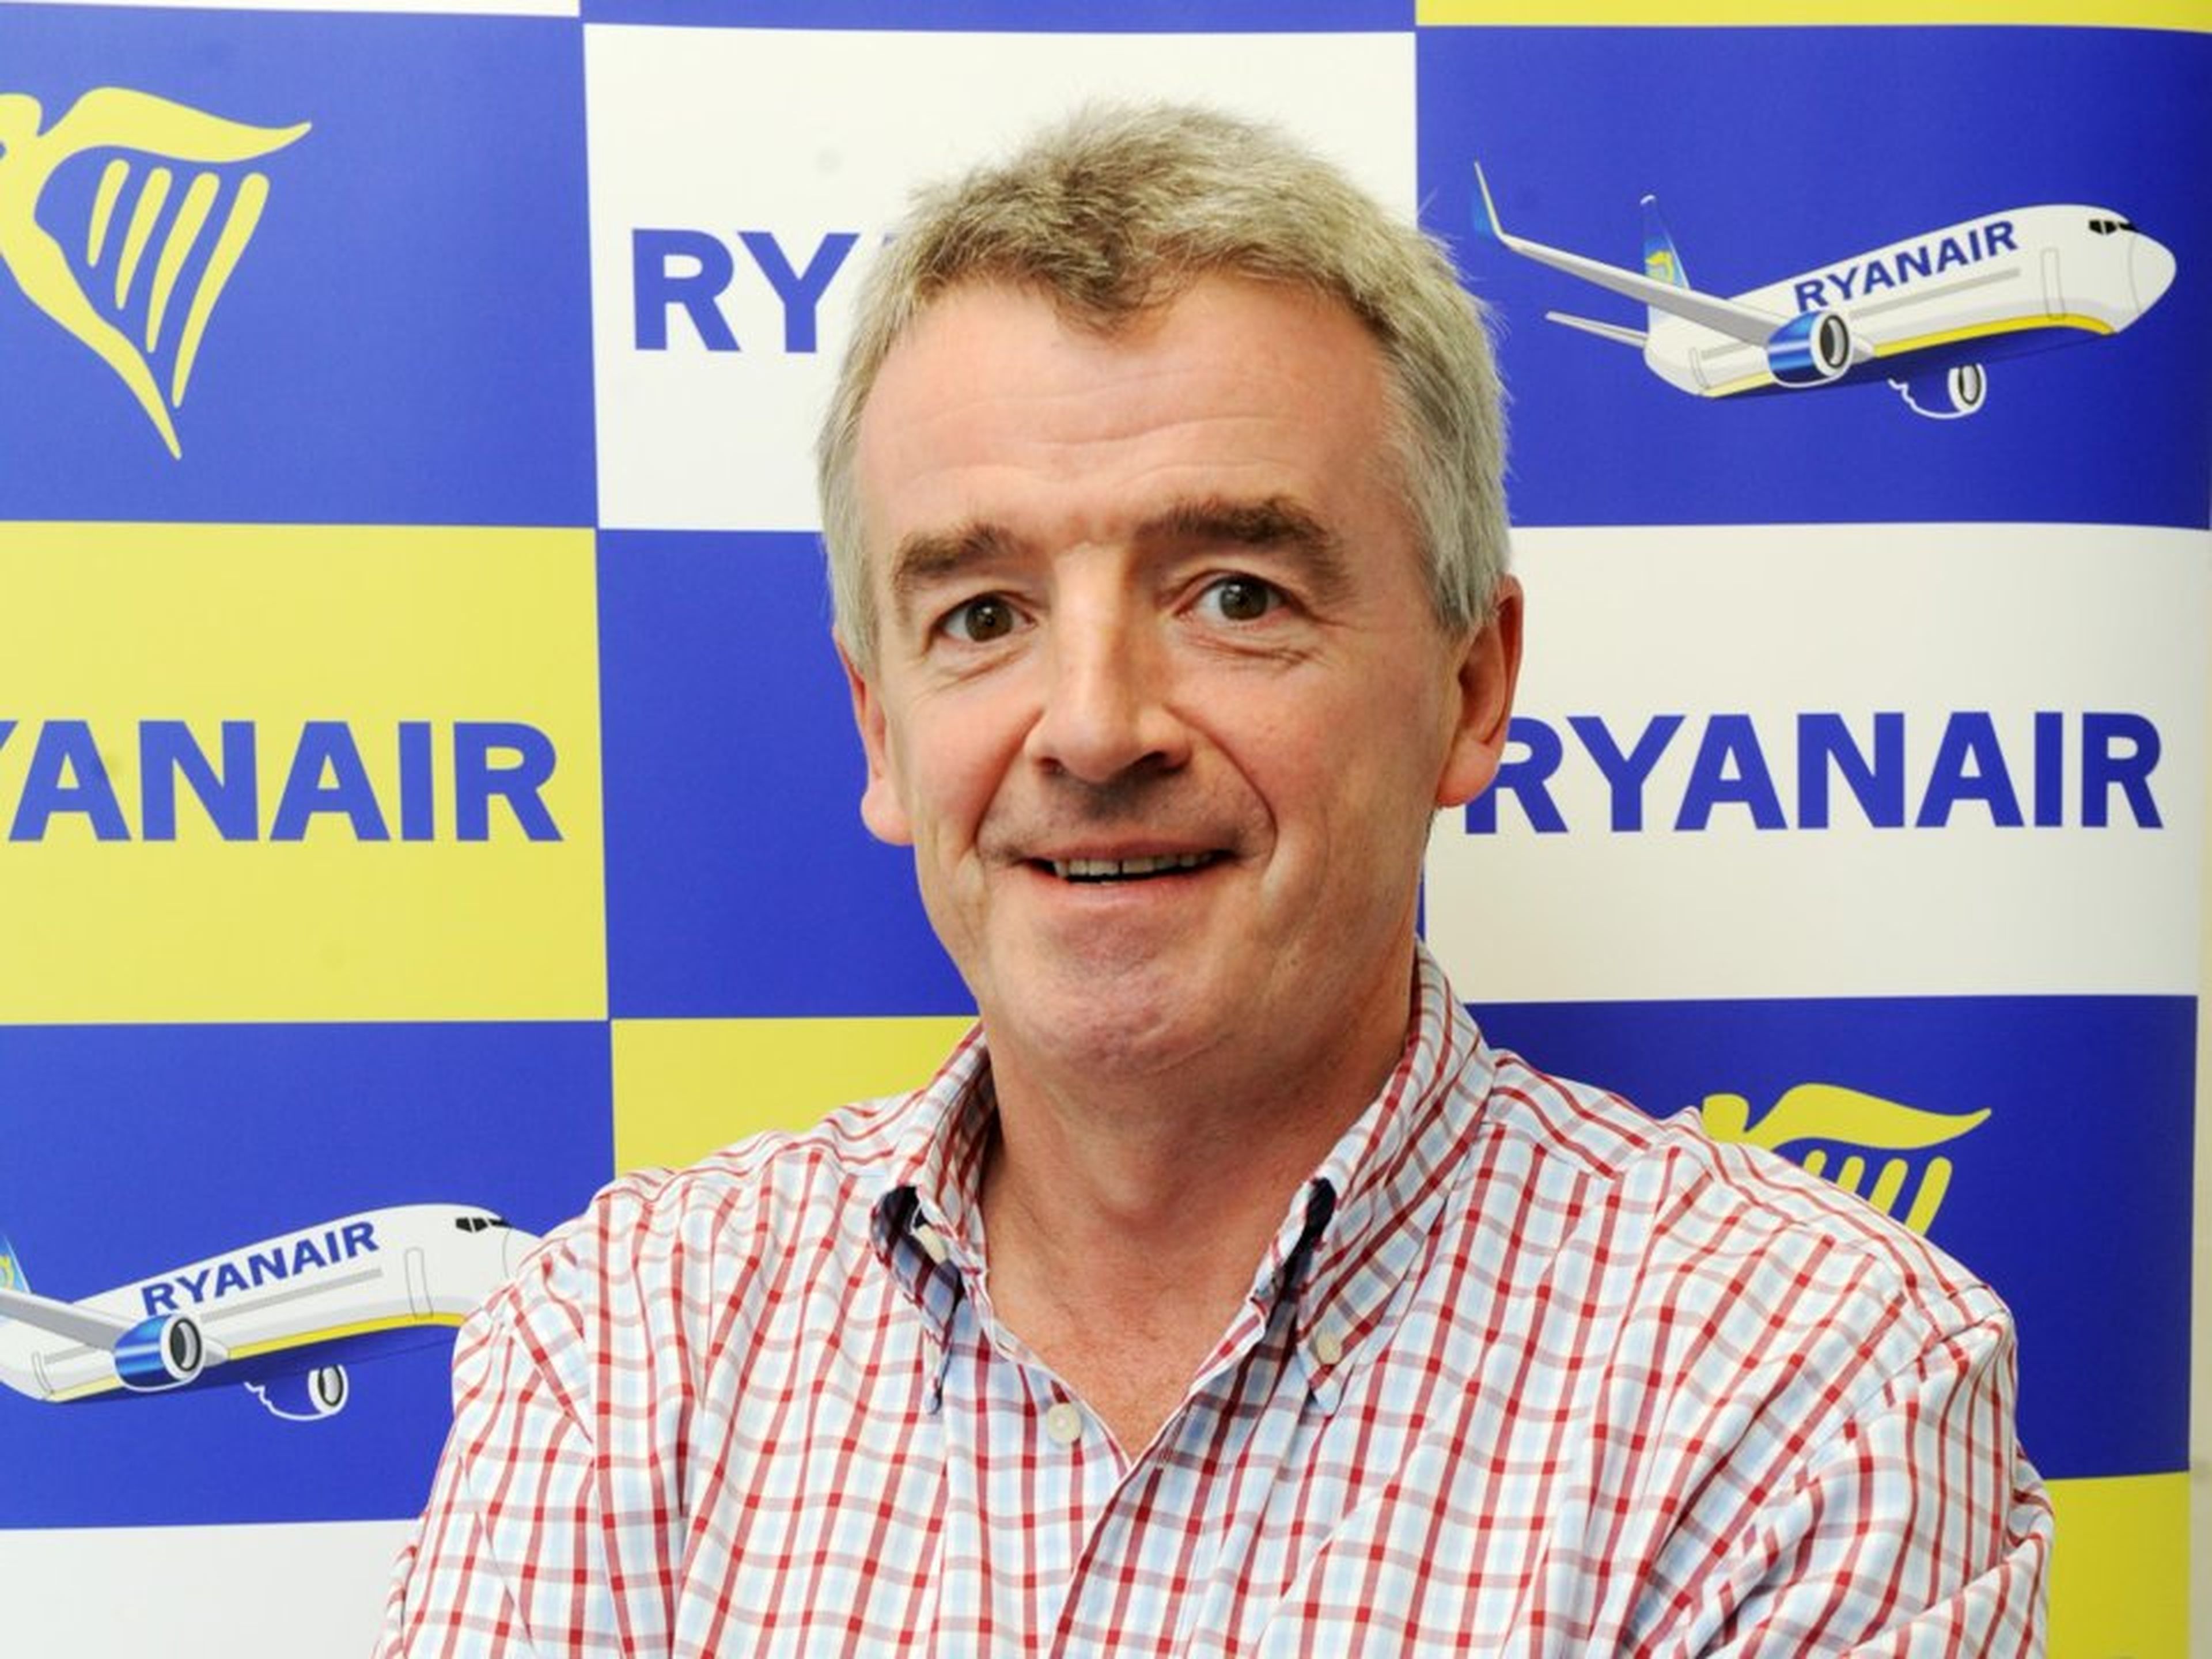 Michael O'Leary, CEO de Ryainair